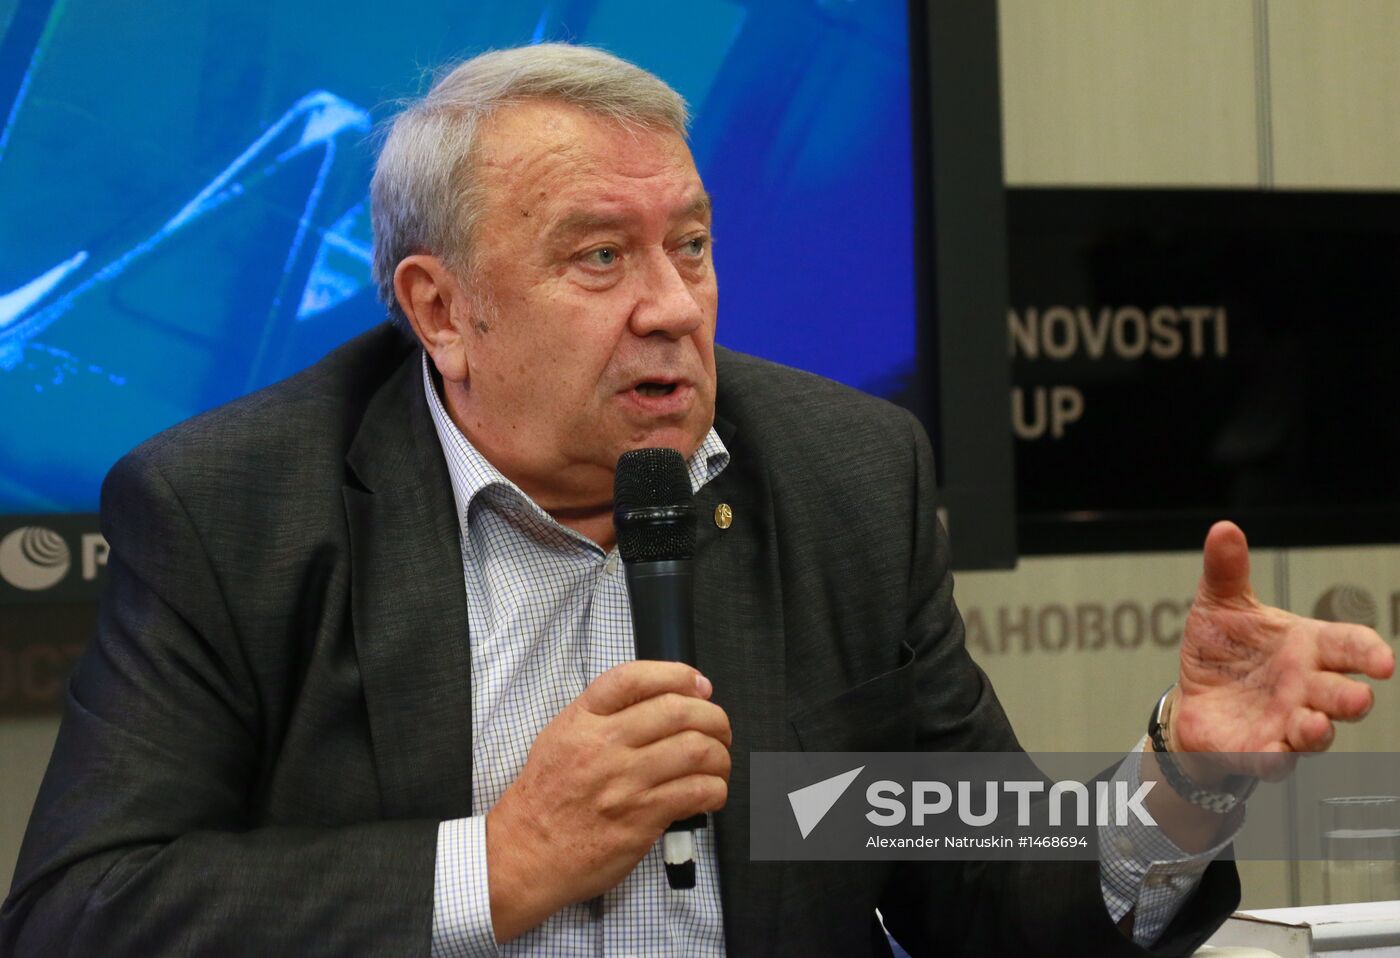 News conference with Vladimir Fortov